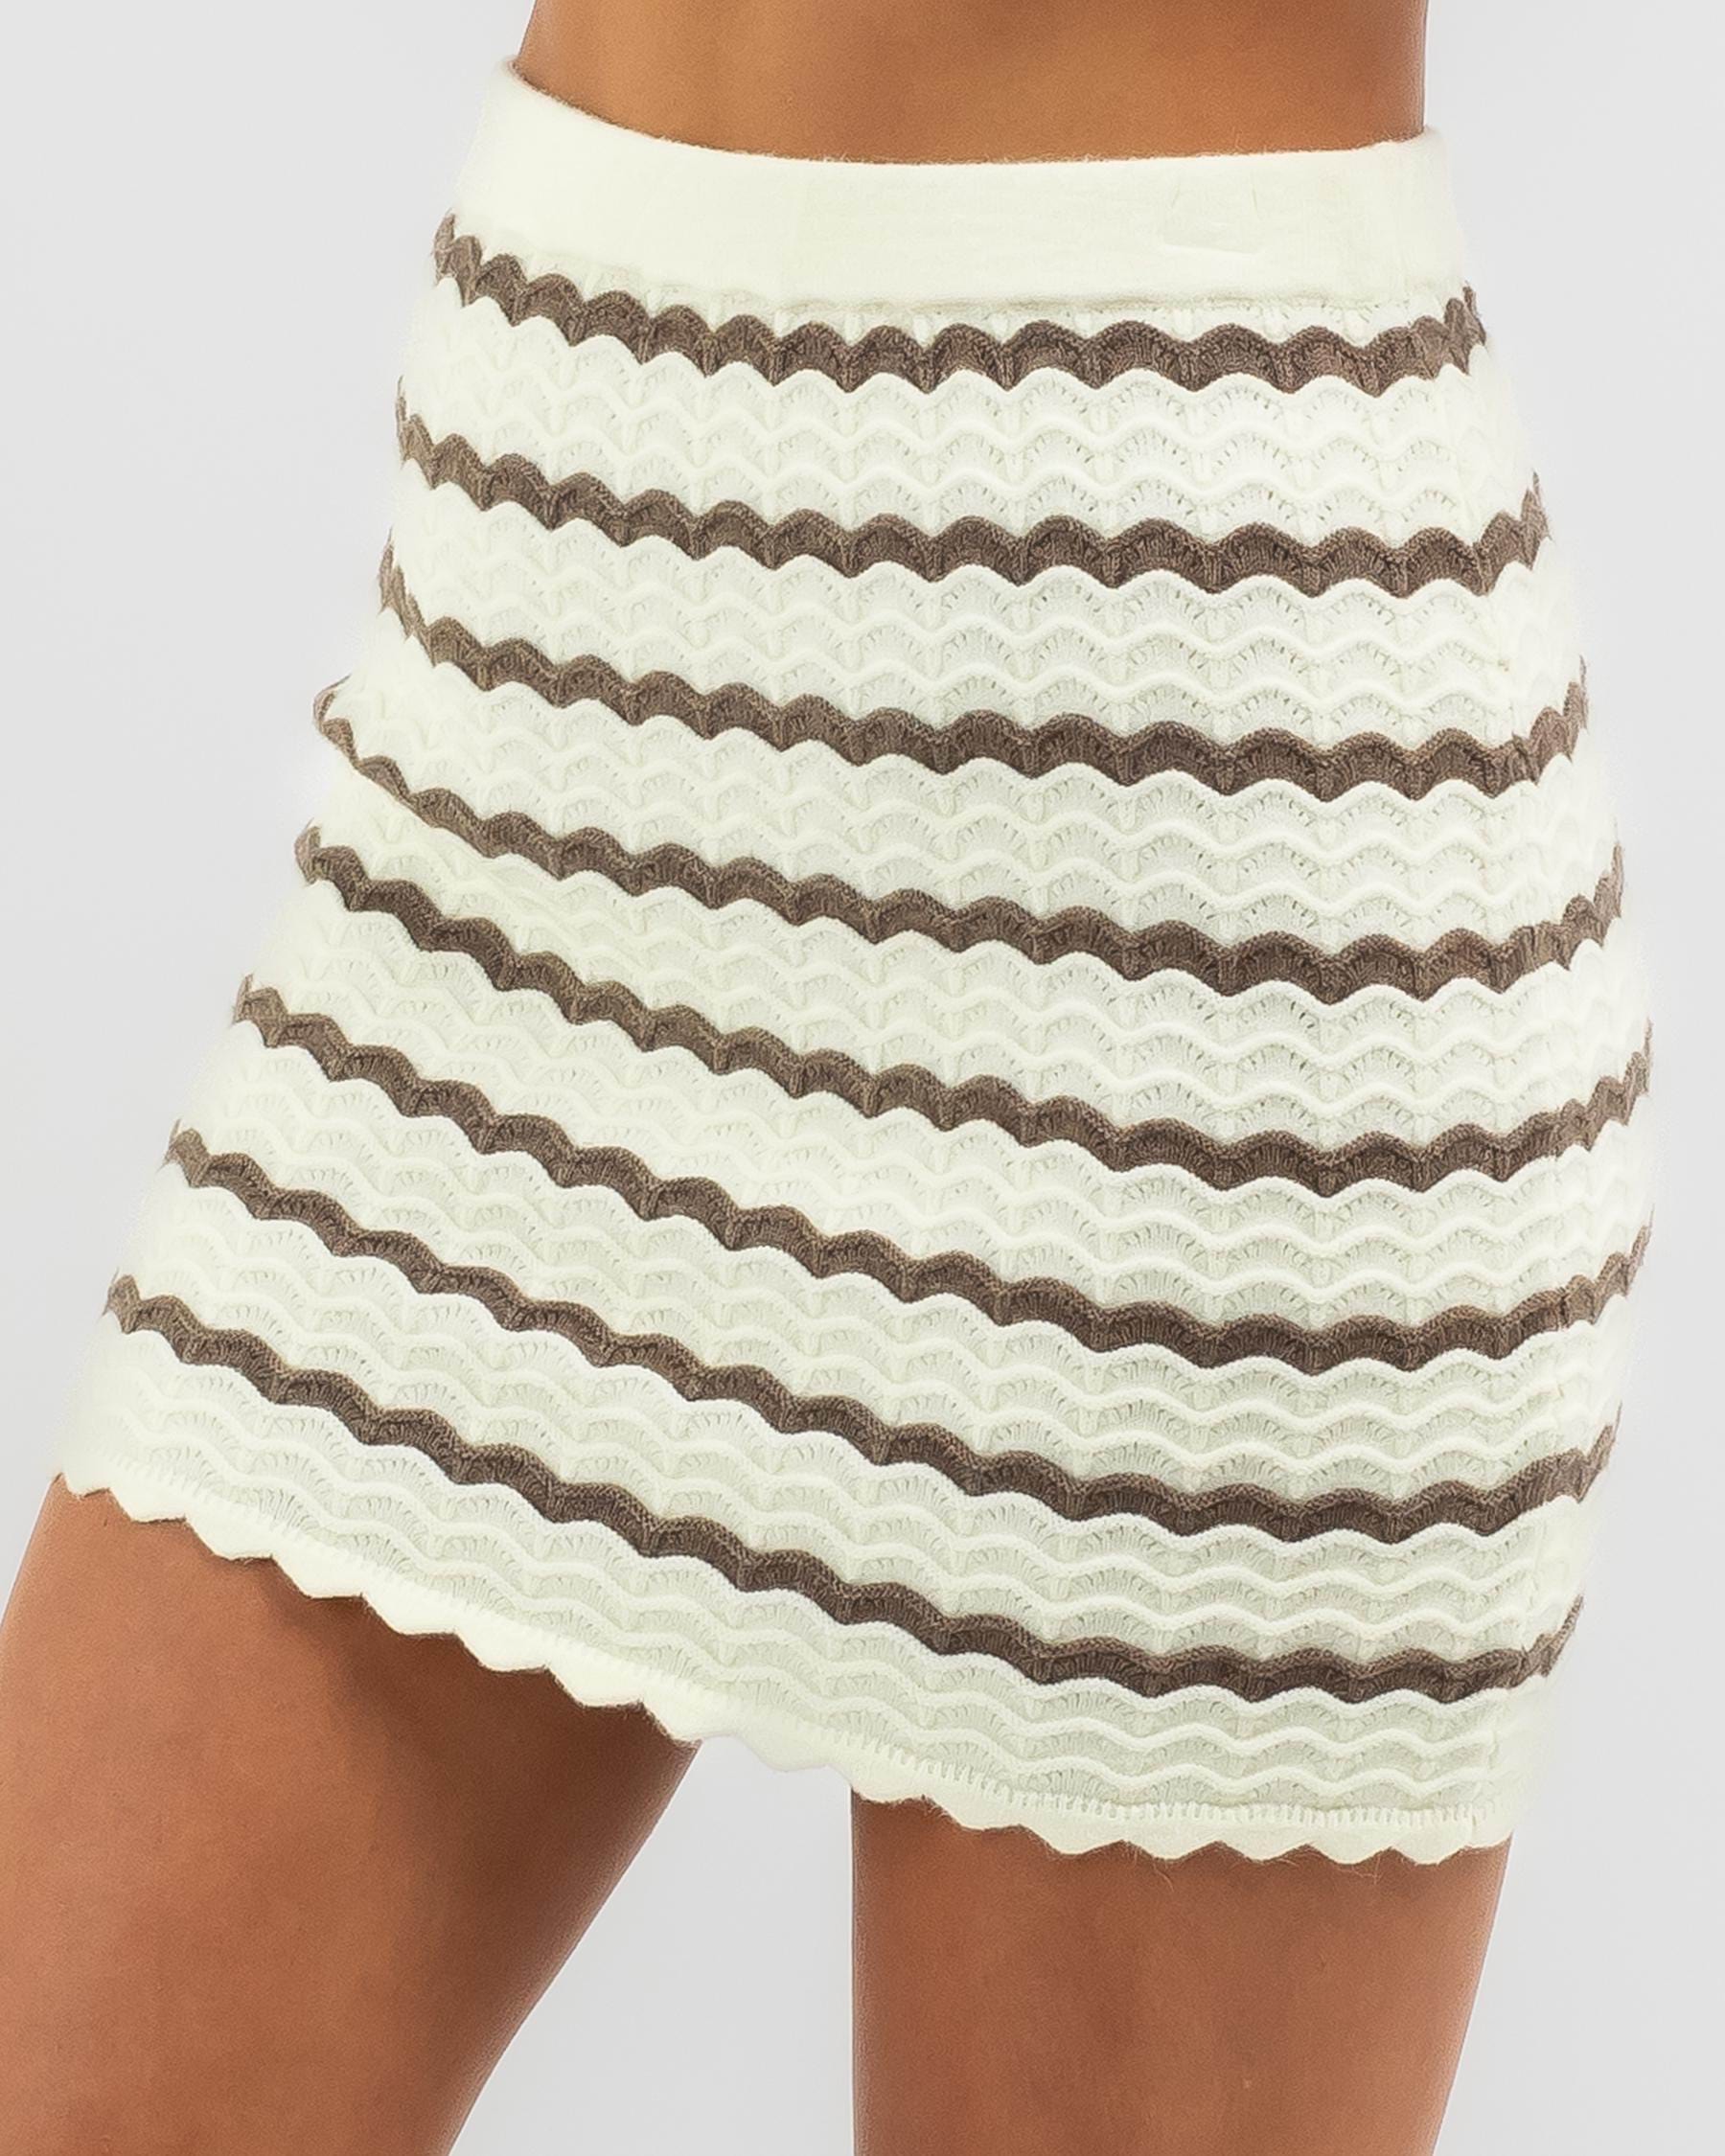 Mooloola Cottesloe Crochet Skirt In Brown Stripe - Fast Shipping & Easy ...